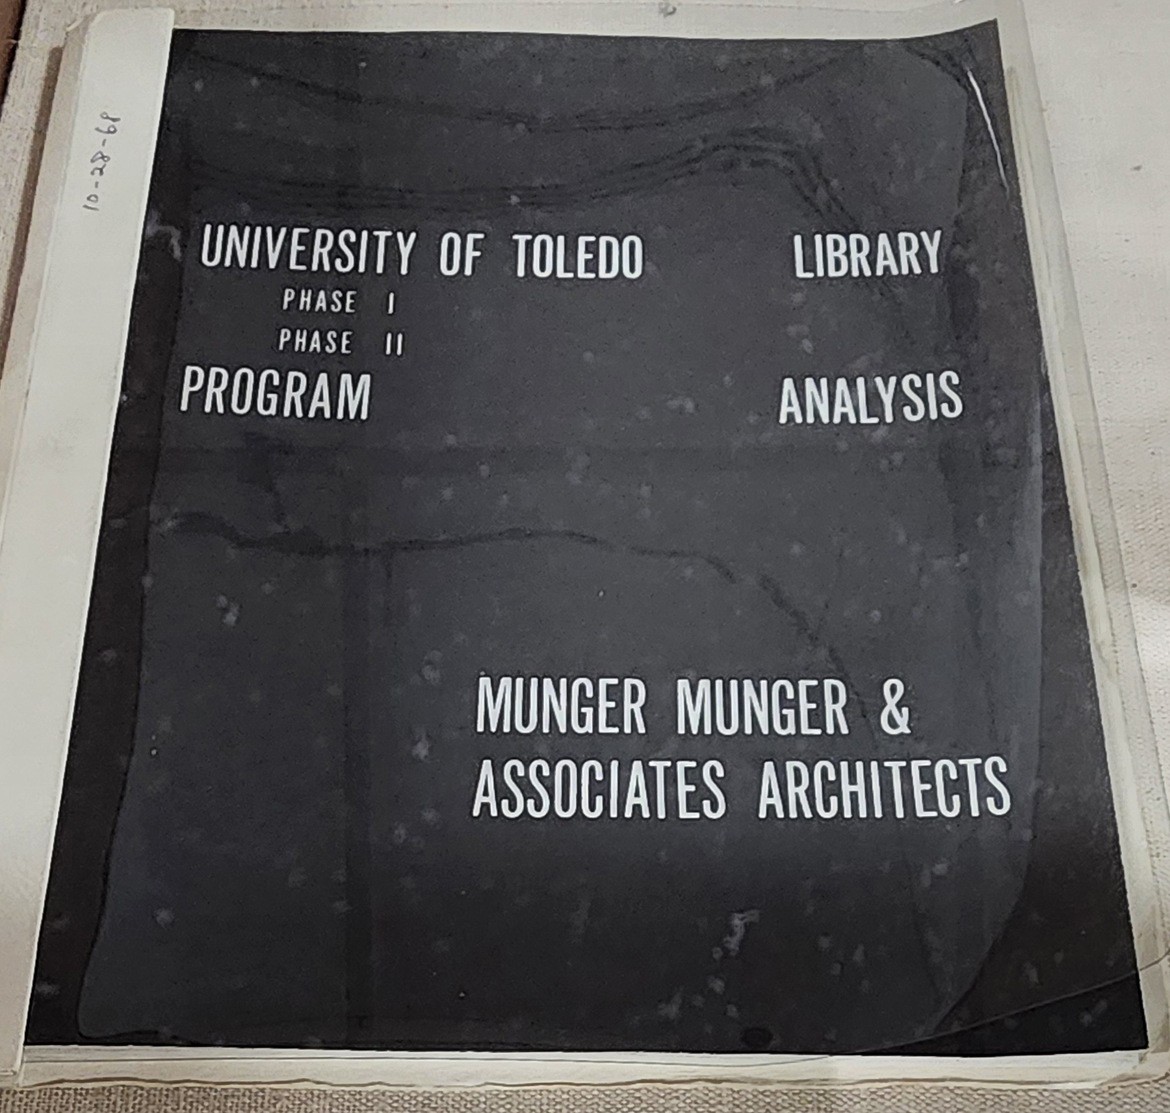 University of Toledo Library Program Analysis (1968), by Munger Munger & Associates Architects